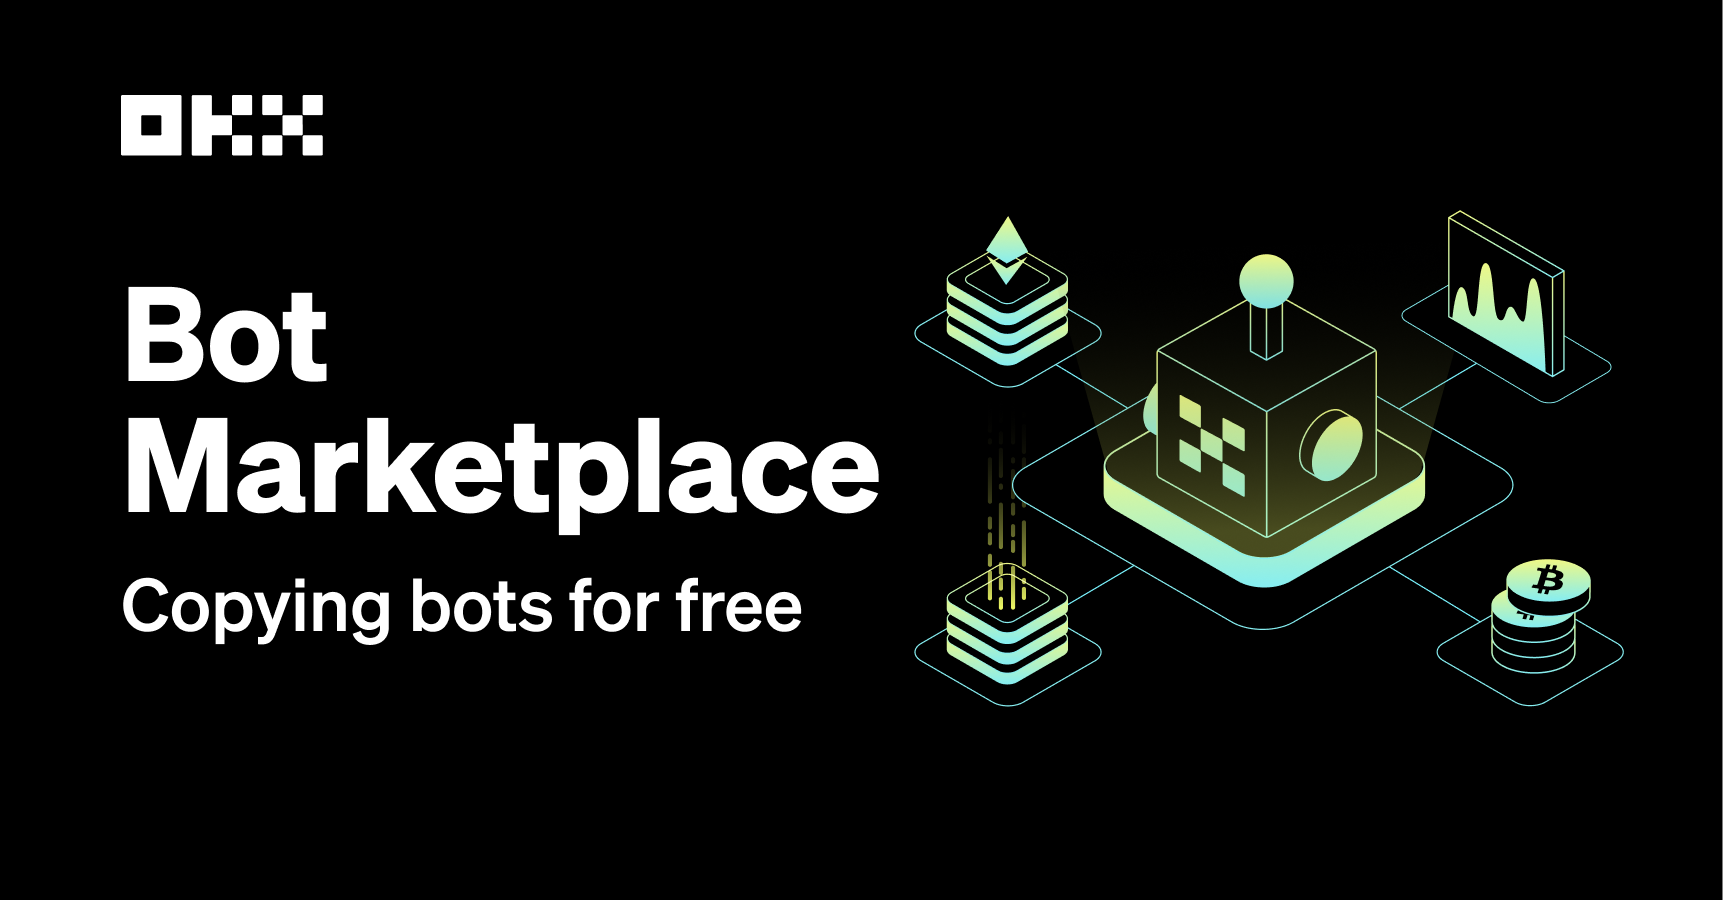 Introducing the OKX Bot Marketplace